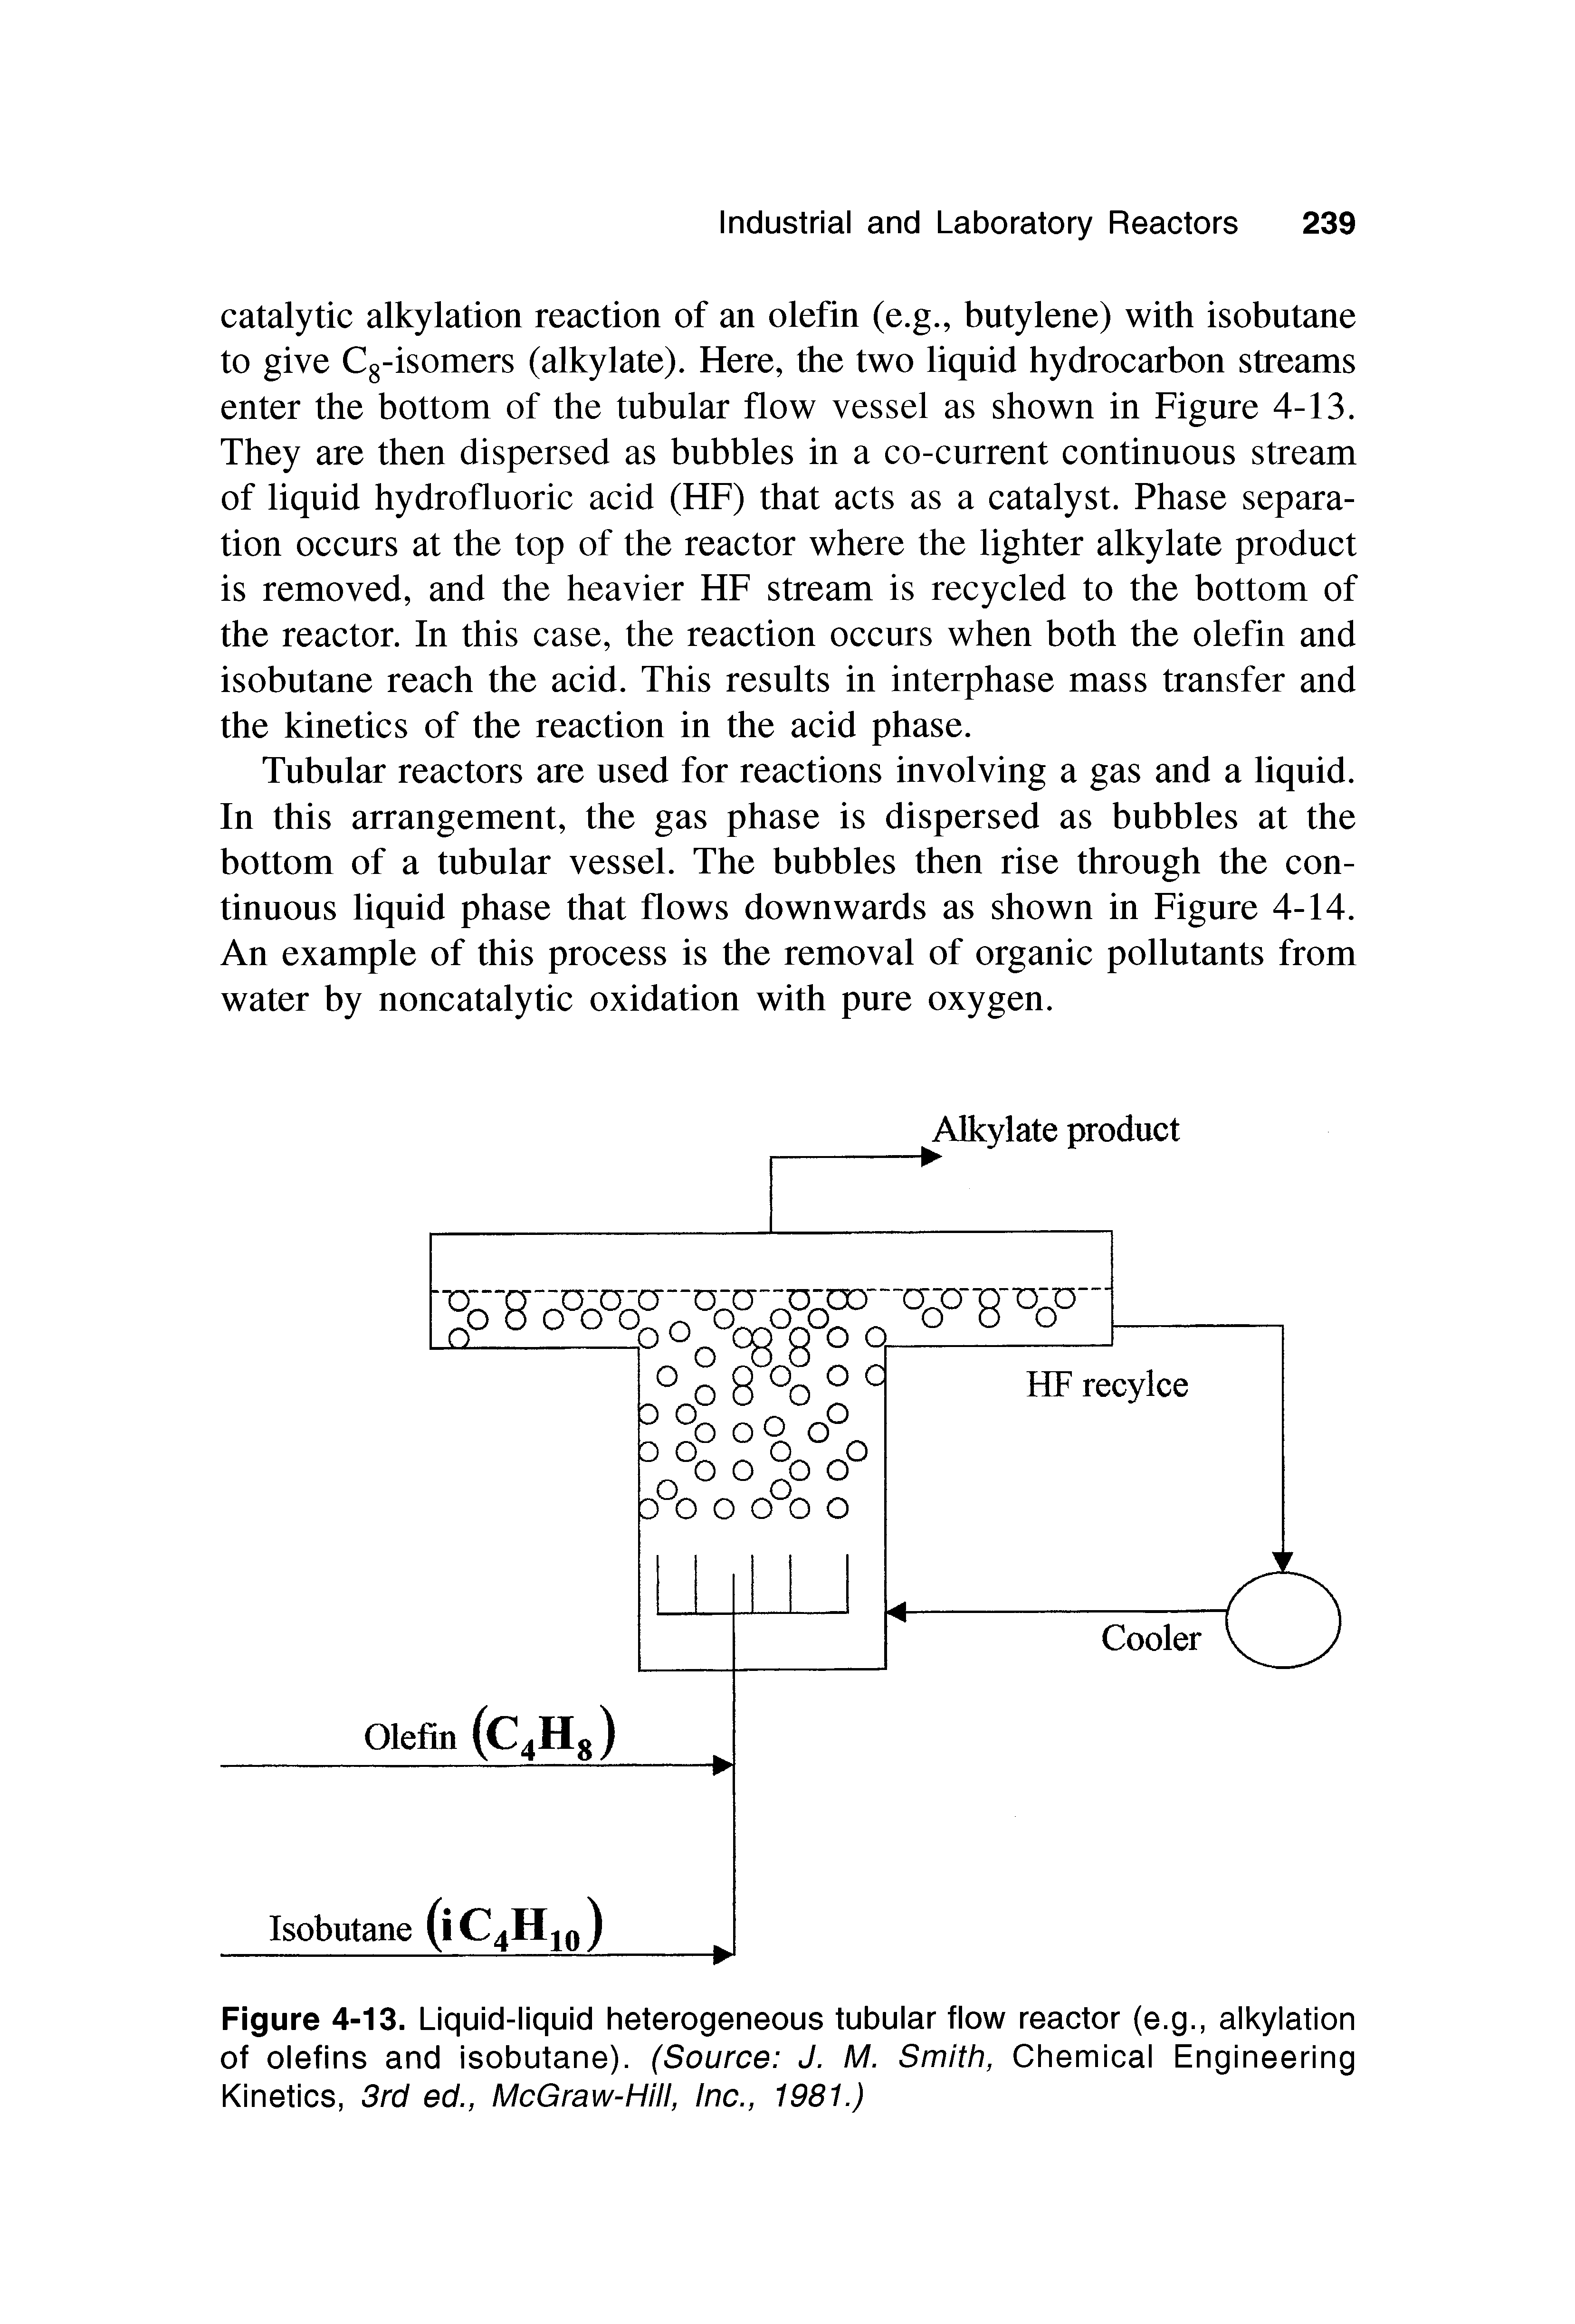 Figure 4-13. Liquid-liquid heterogeneous tubular flow reactor (e.g., alkylation of olefins and isobutane). (Source J. M. Smith, Chemical Engineering Kinetics, 3rd ed., McGraw-Hill, Inc., 1981.)...